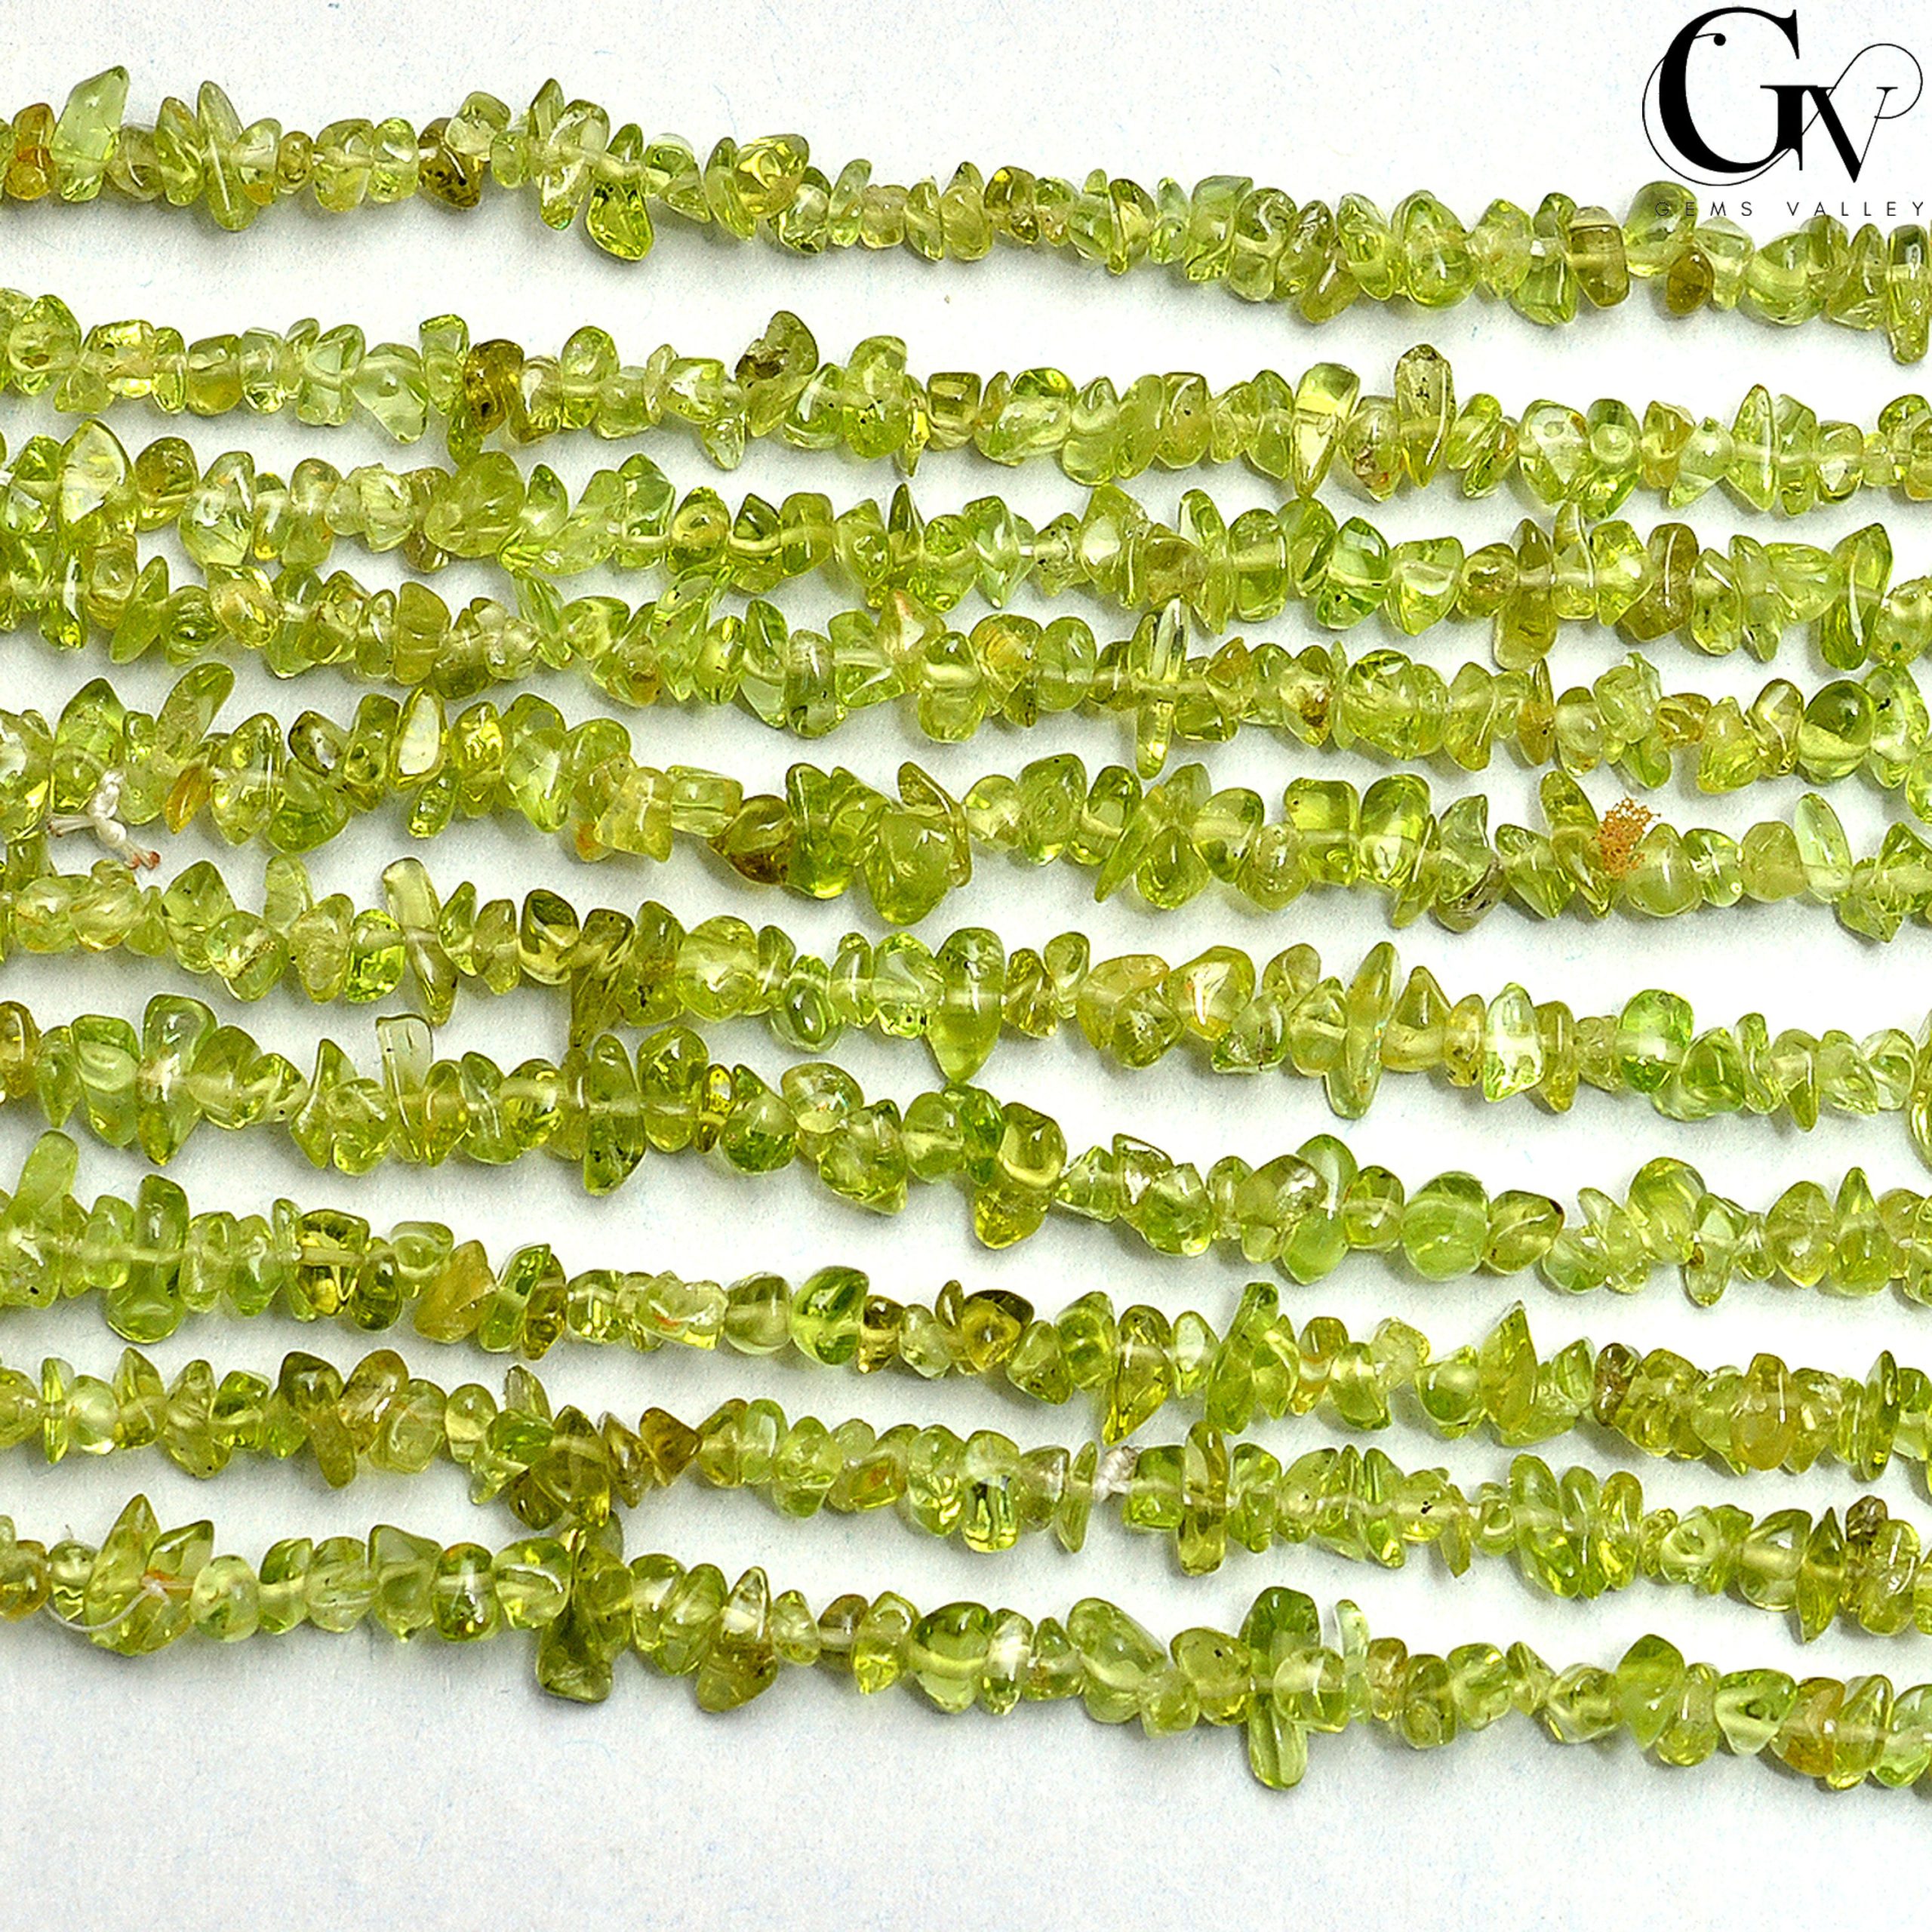 Natural Peridot Chip Beads, Semi Precious Gemstone Beads For Jewelry Craft Making, 3-5 Mm Peridot Gemstone Beads, 34 Inches Diy Beads